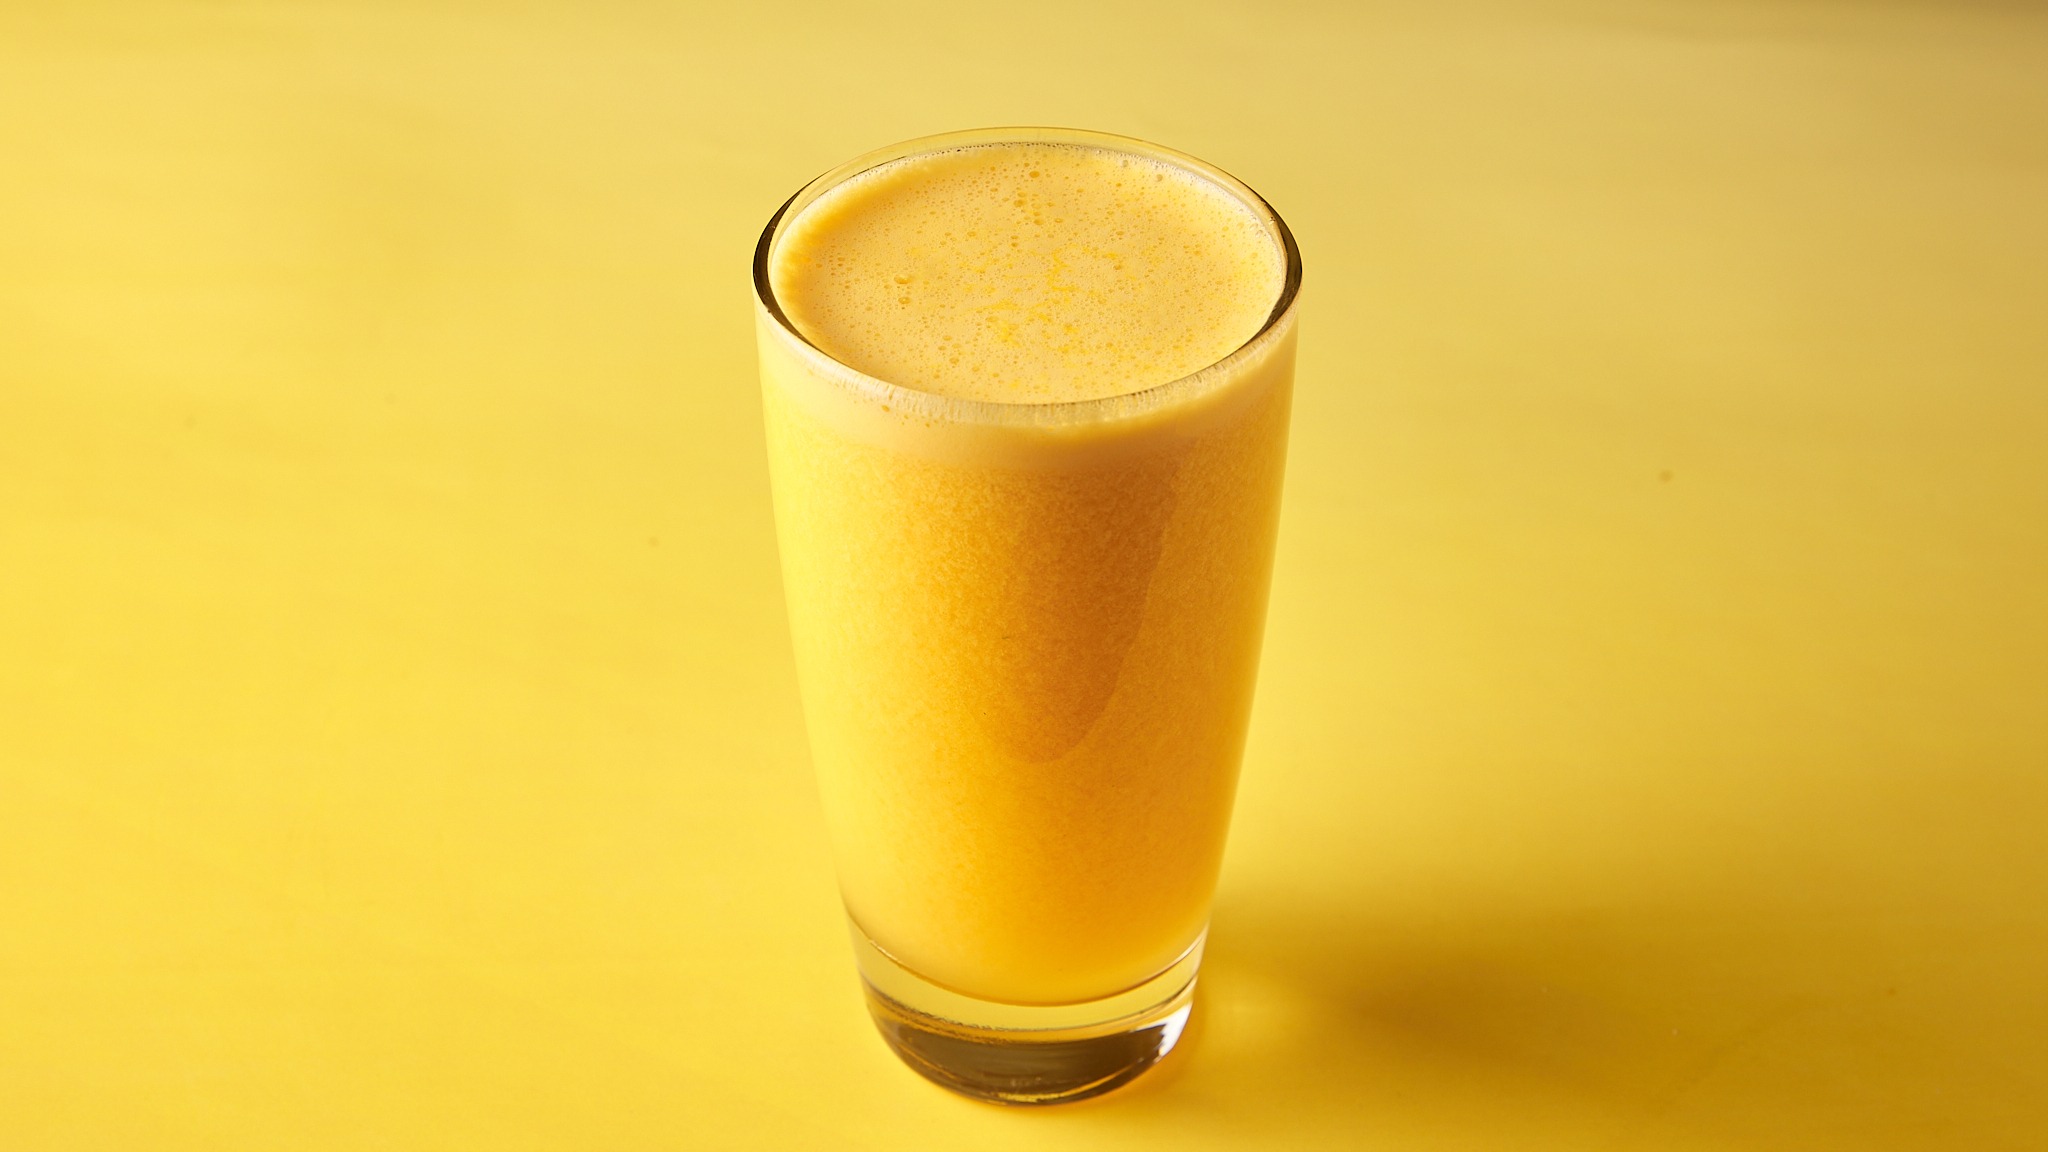 
Orange Juice
